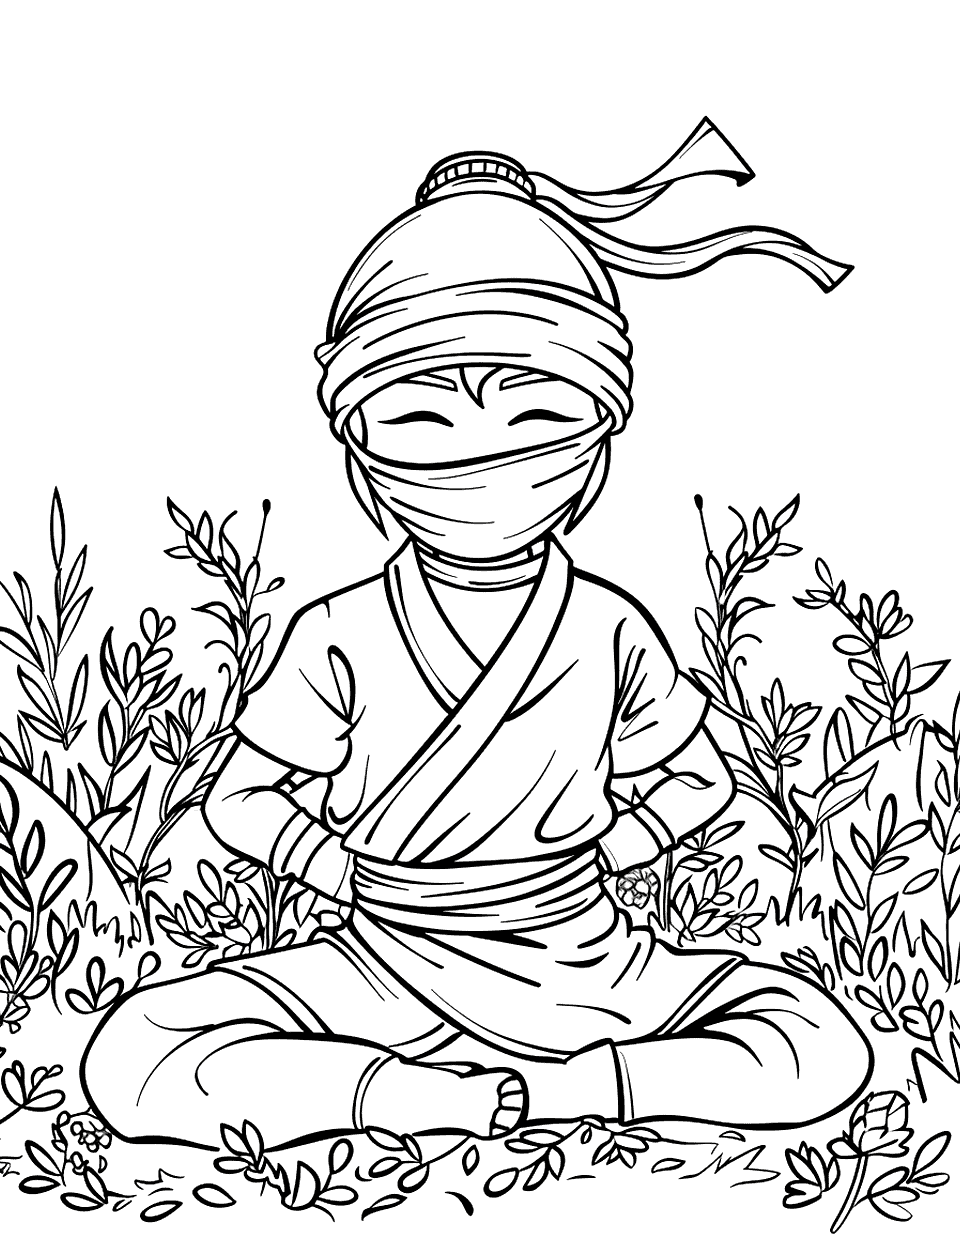 Green Ninja's Meditation Ninja Coloring Page - The Green Ninja meditates in a peaceful garden, finding inner peace.